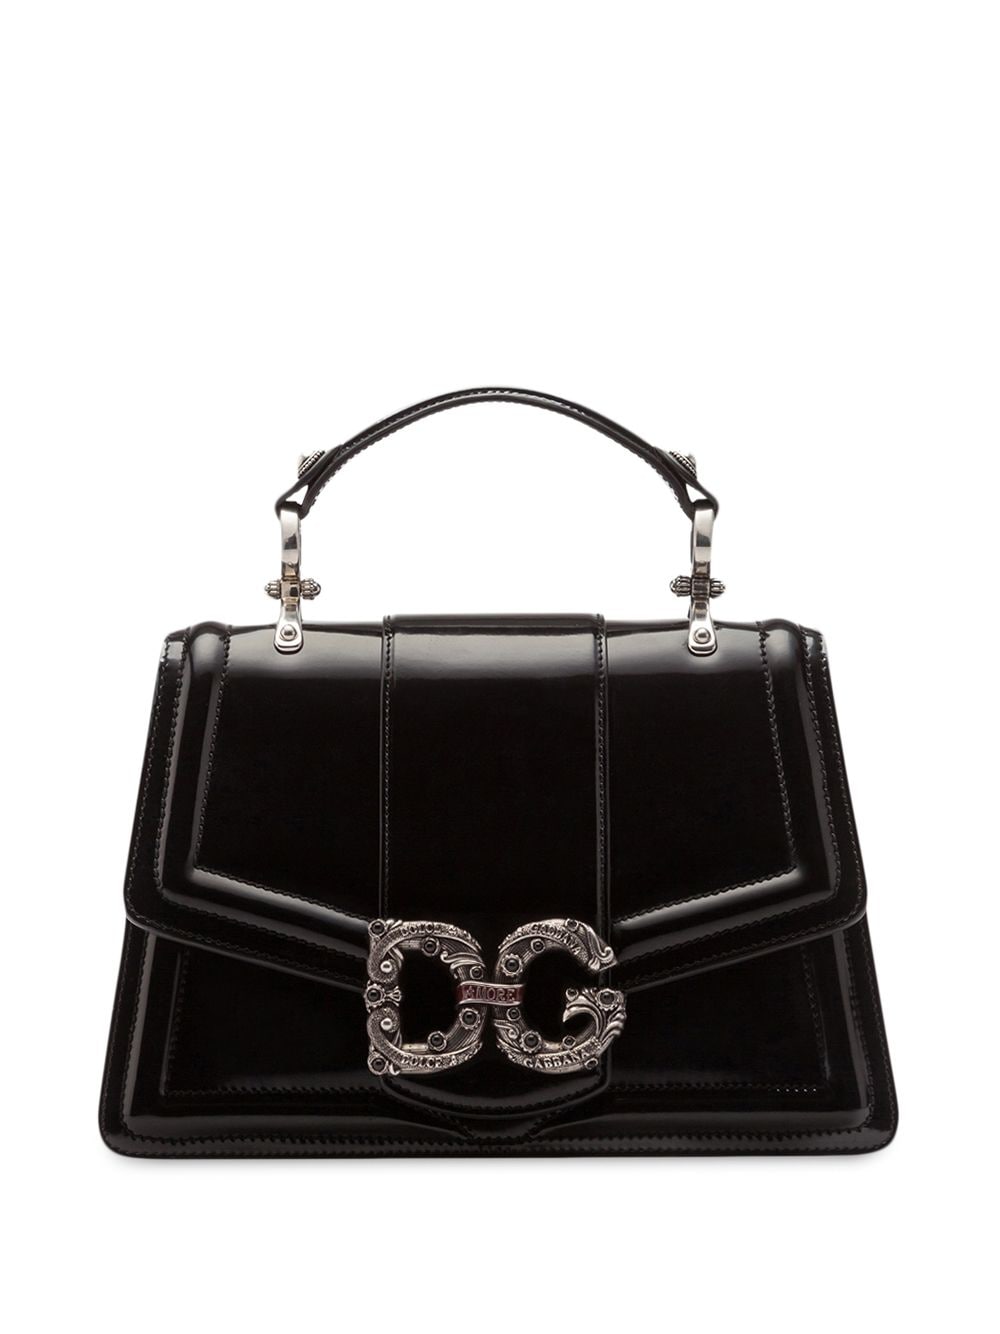 Dolce & Gabbana Small Dg Amore Bag In Calfskin in Black